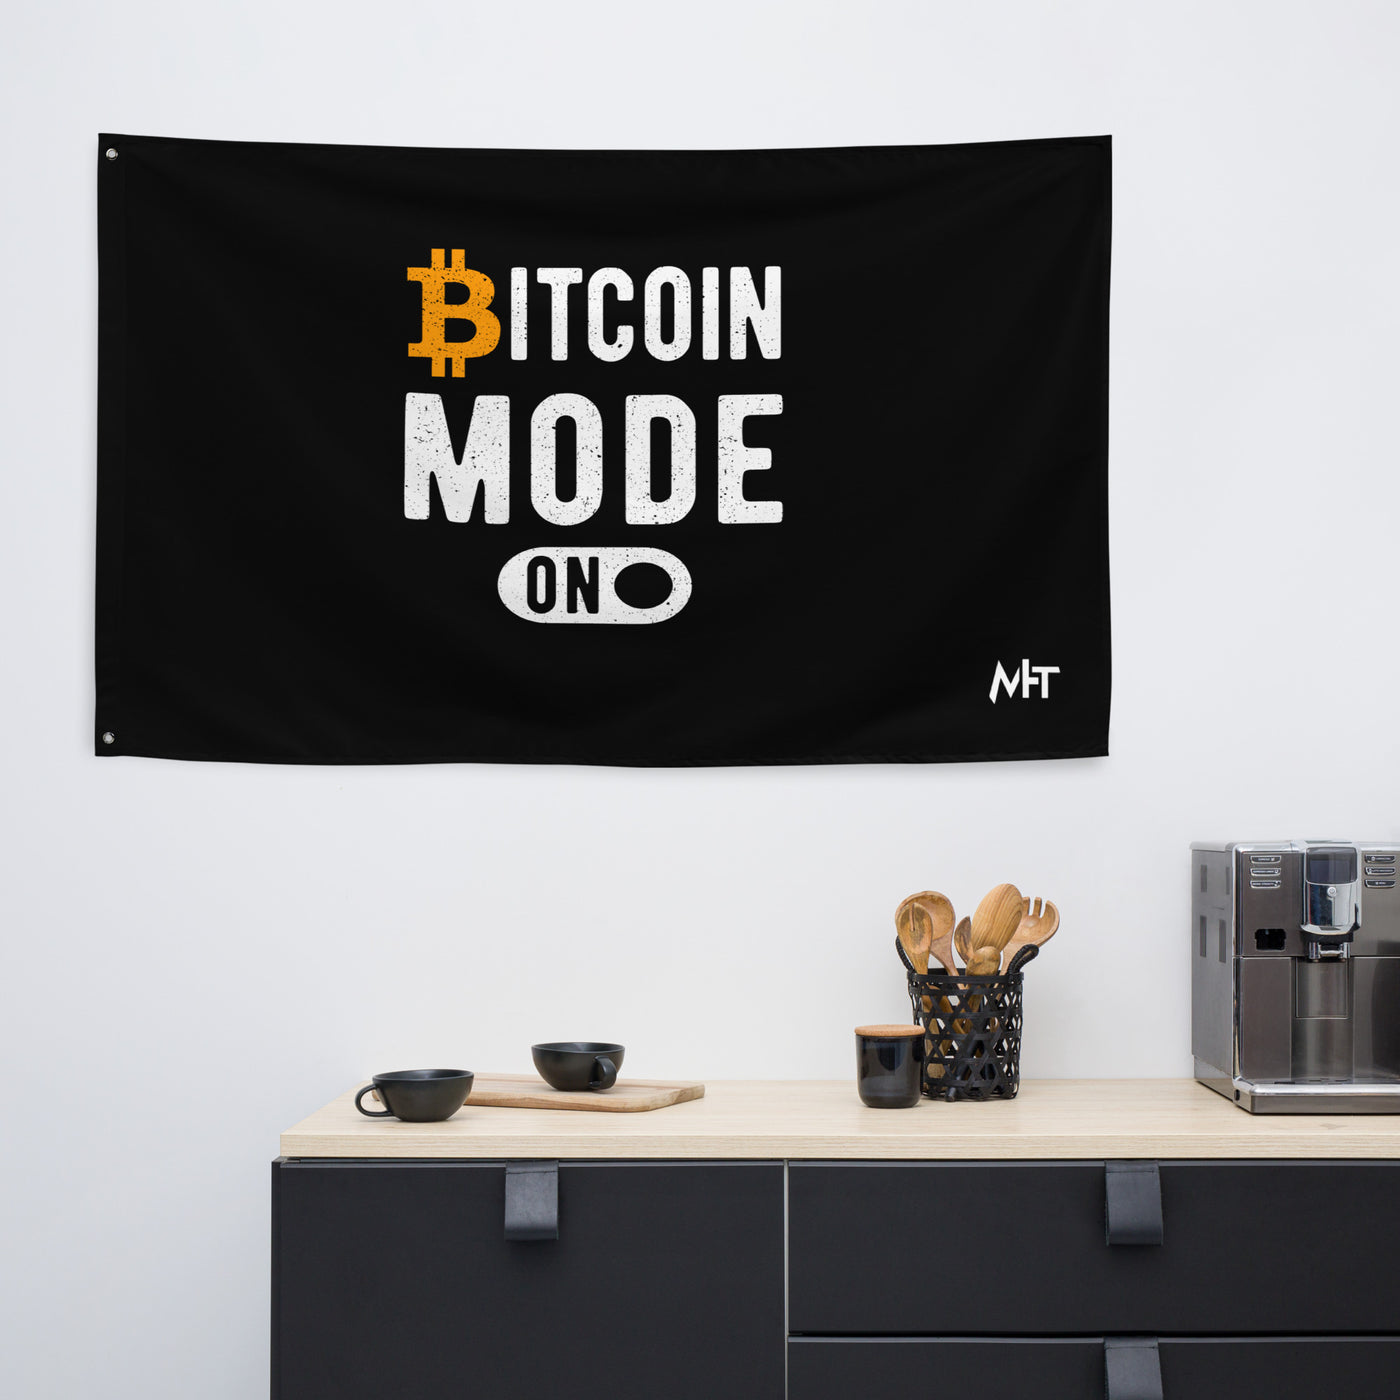 Bitcoin Mode is On Flag